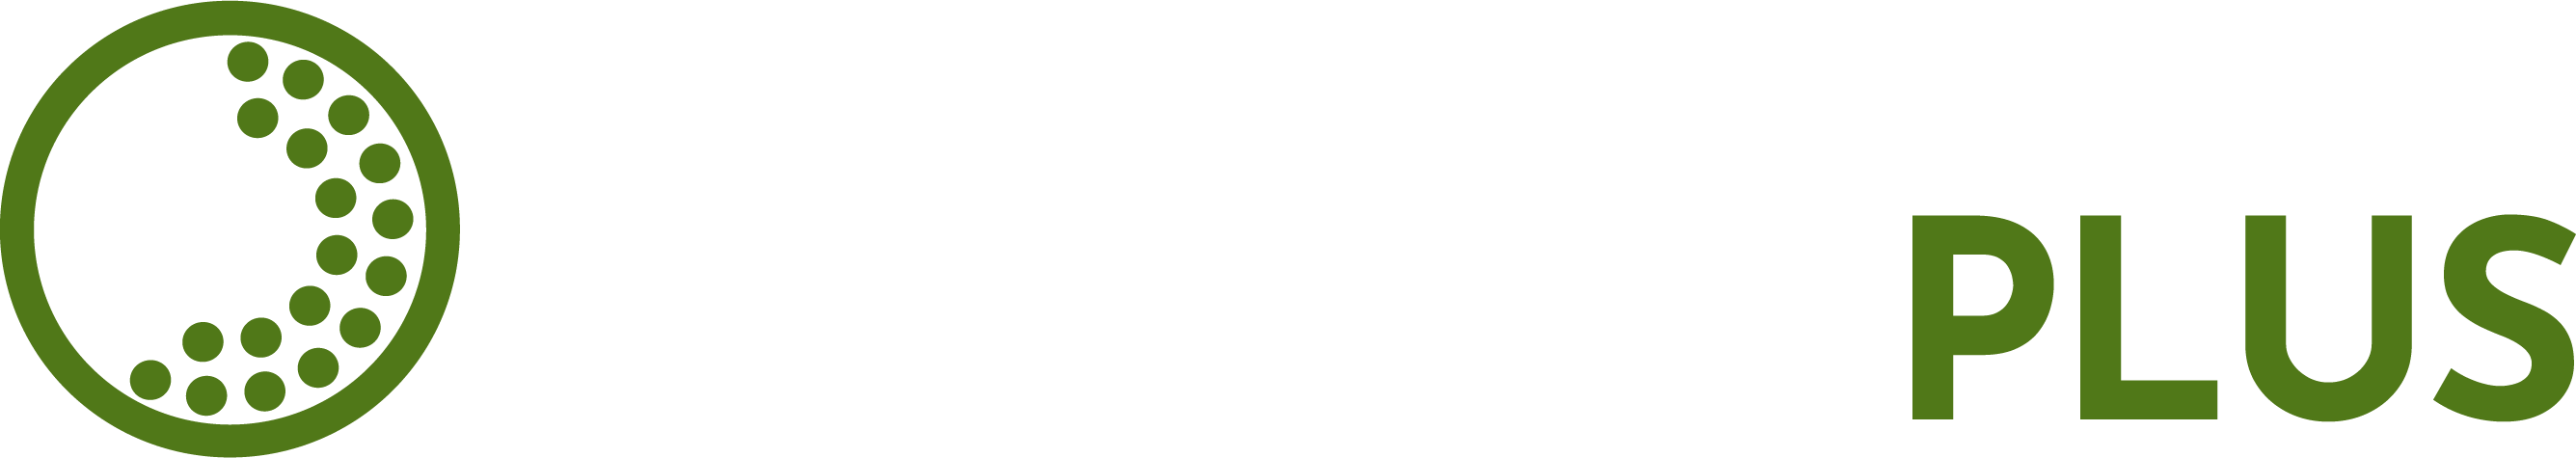 GolfPlus_Logo